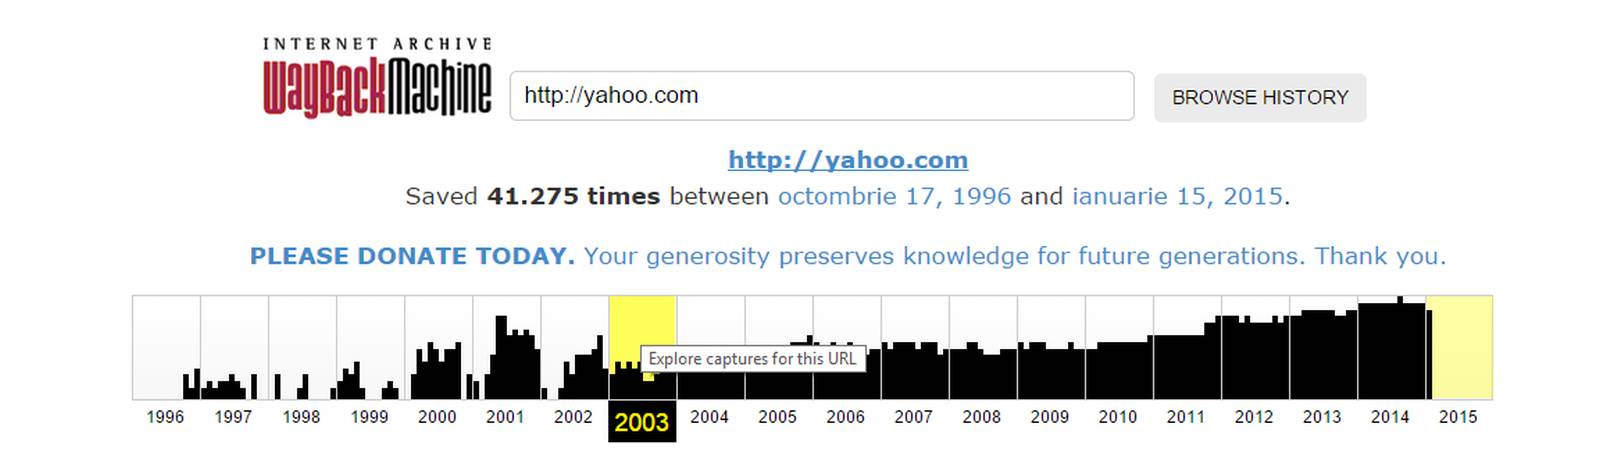 Yahoo-Internet-Archive